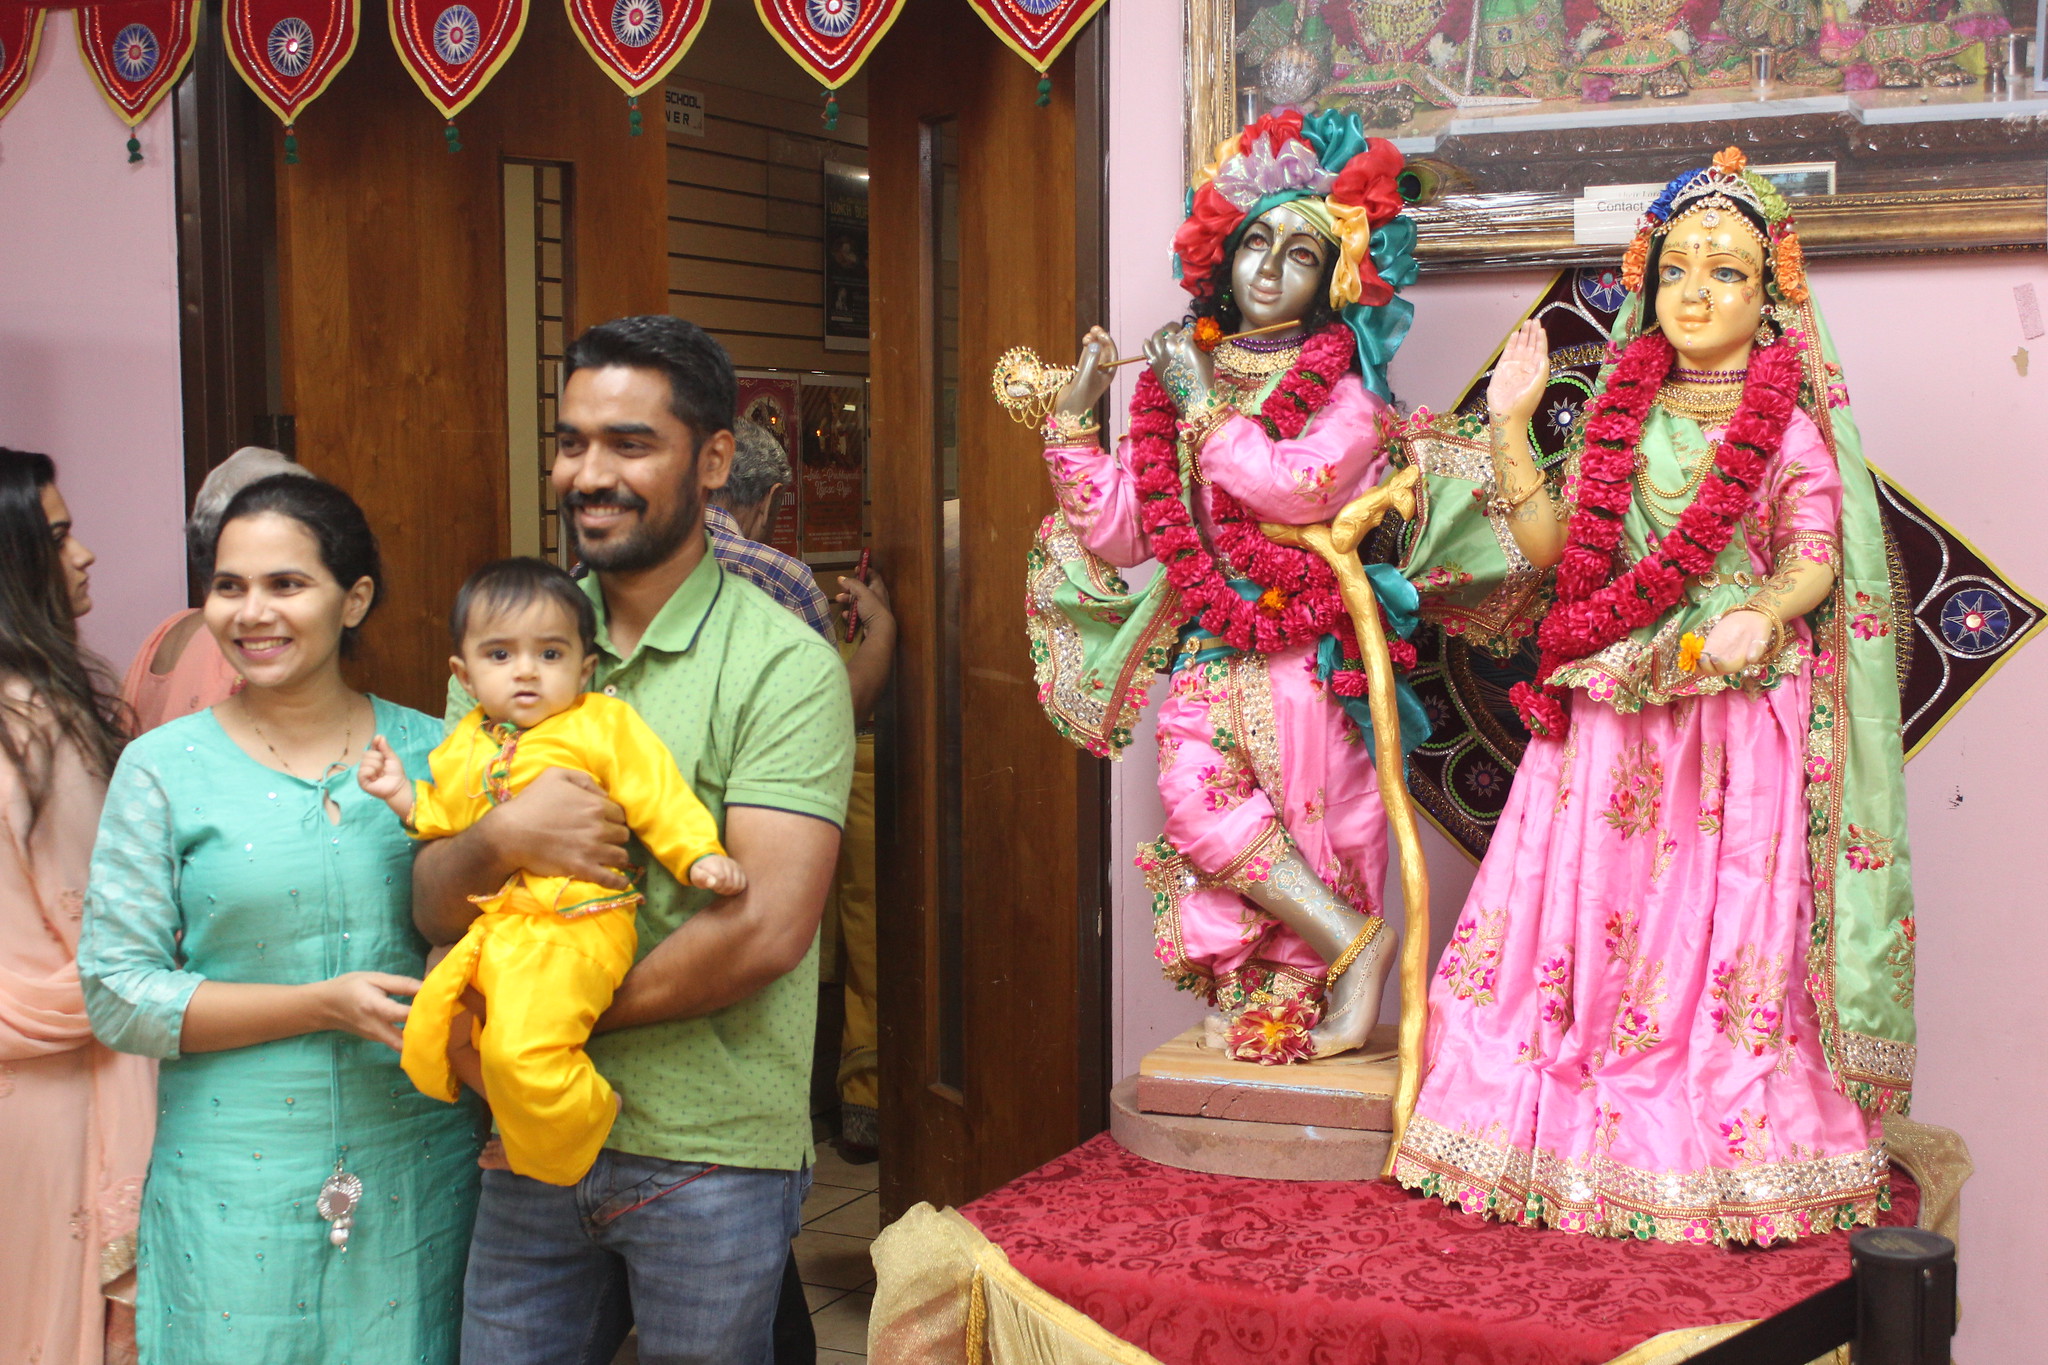 A family in New Jersey celebrates the Hindu festival of Janmashtami.